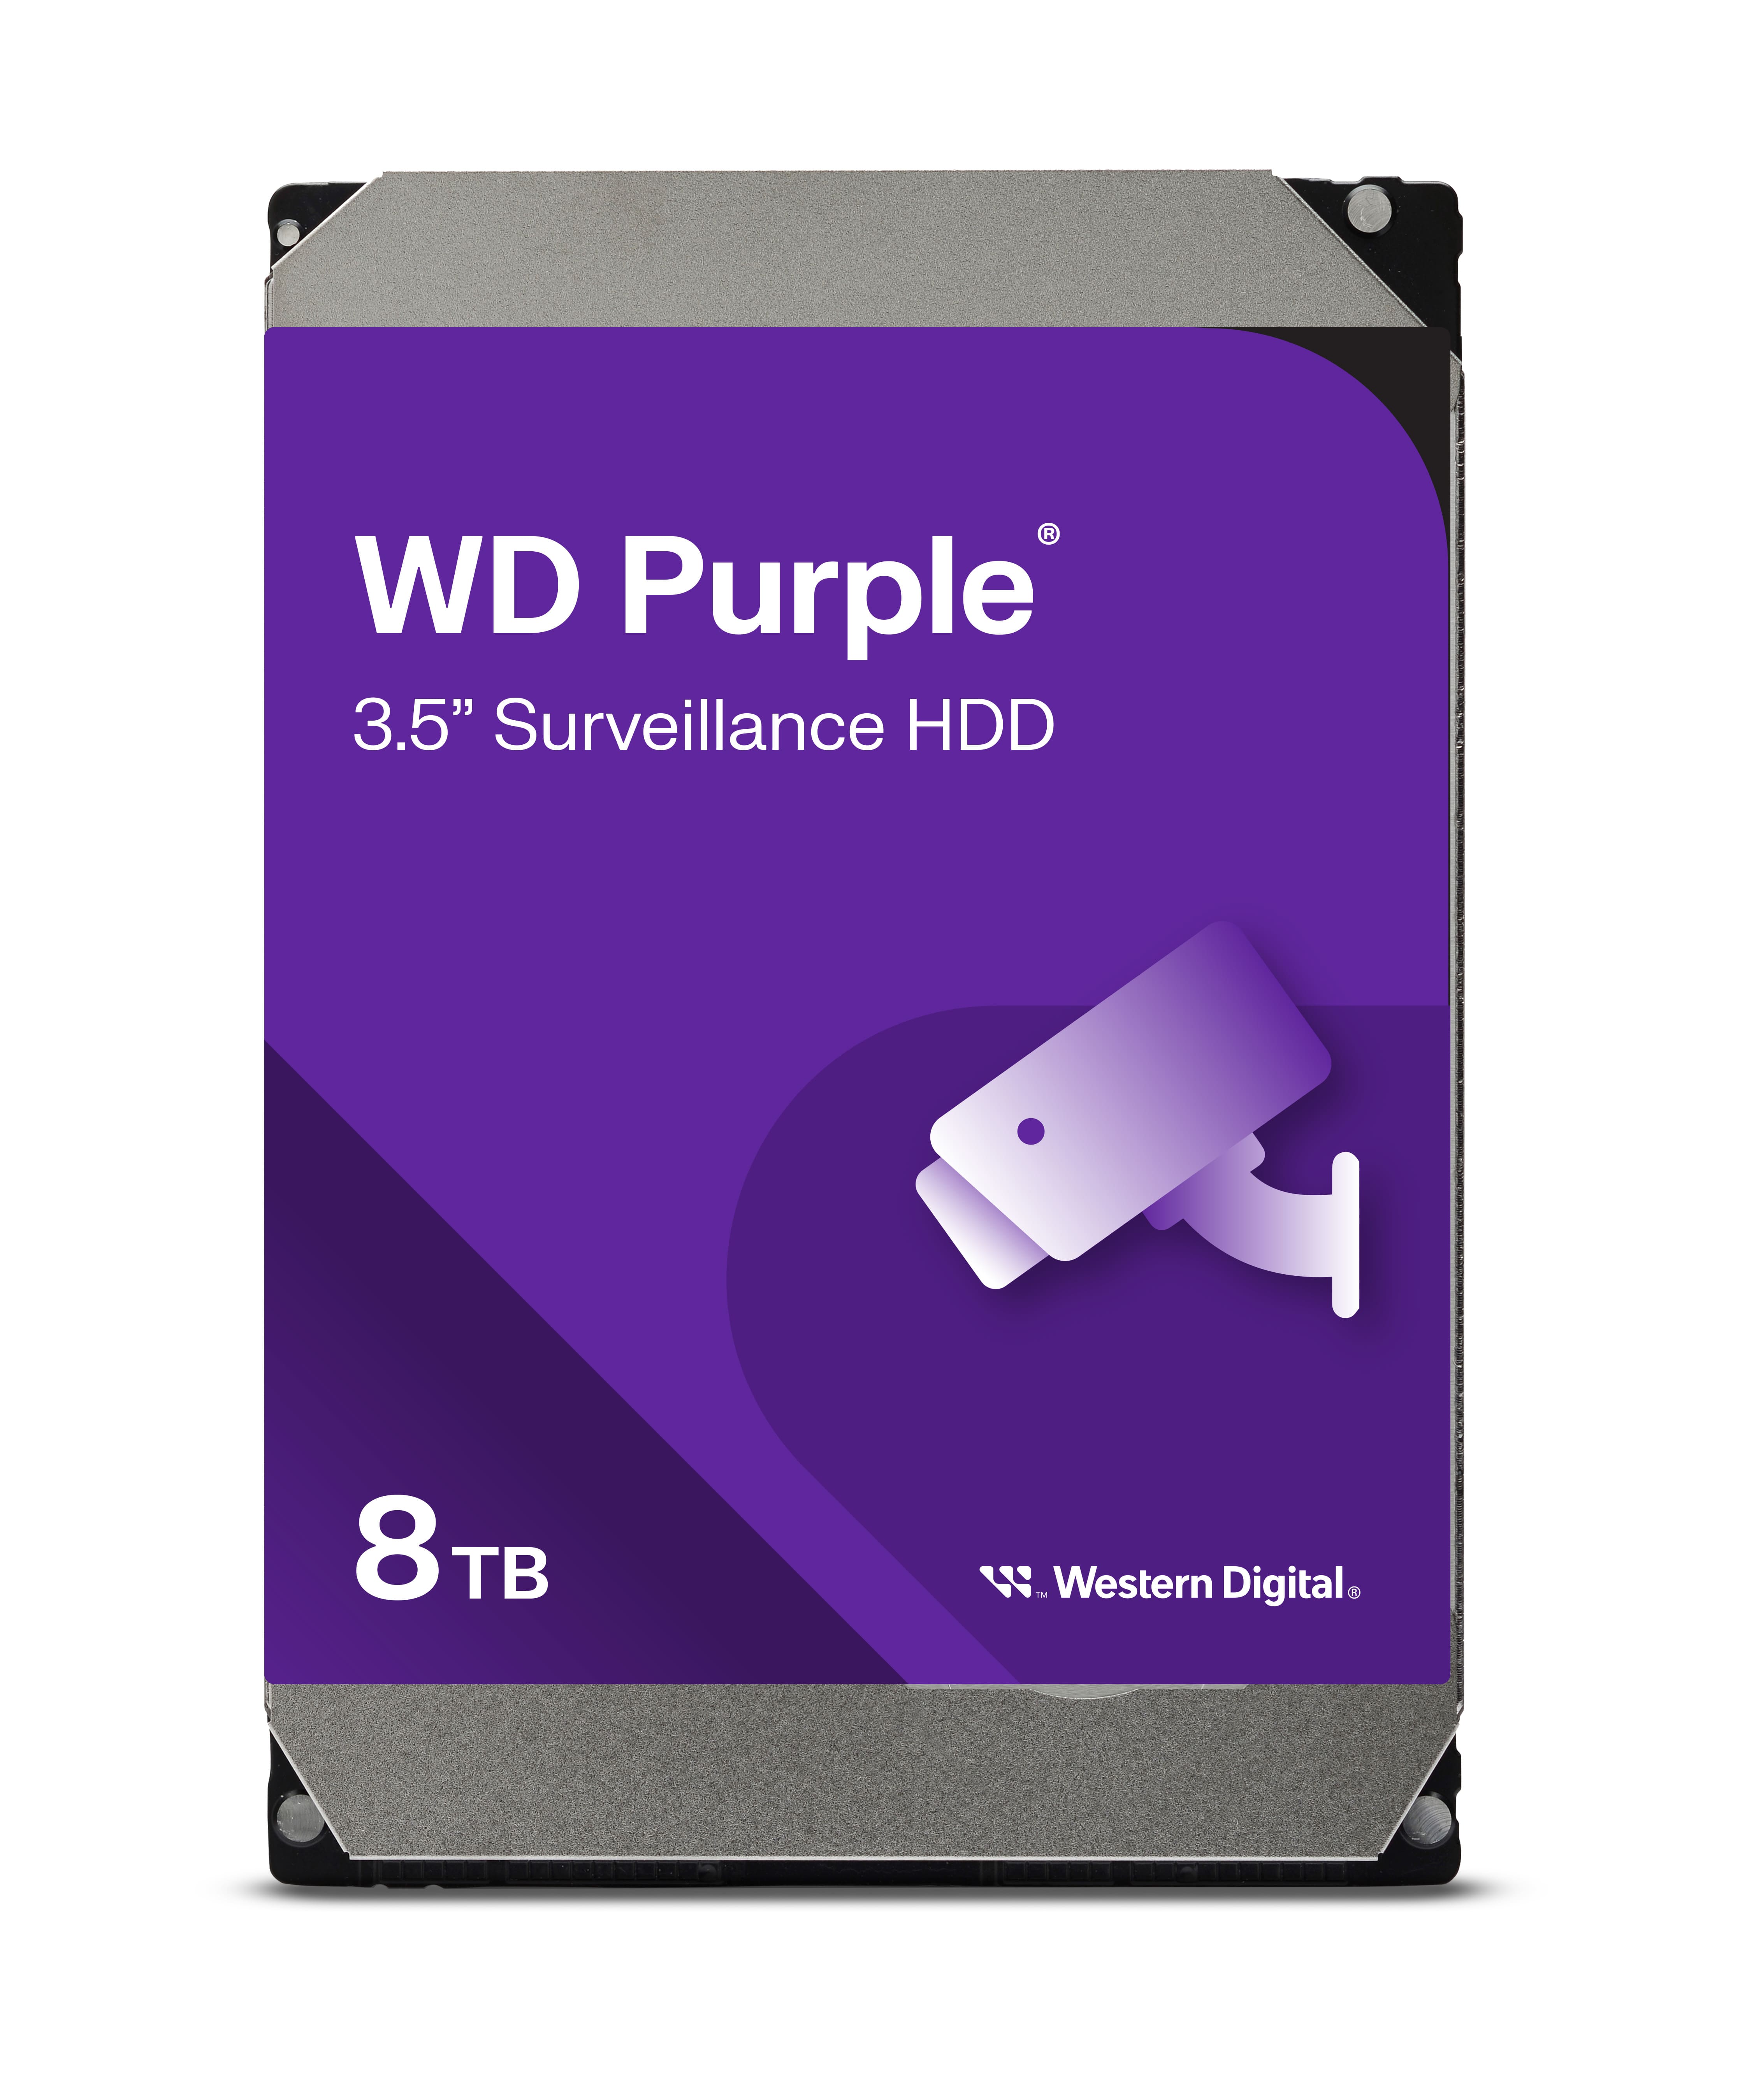 Western Digital ウエスタンデジタル WD85PURZ [ WD Purple 内蔵 HDD ハードディスク 8TB CMR 3.5インチ SATA キャッシュ256MB 監視システム メーカー保証3年 ]